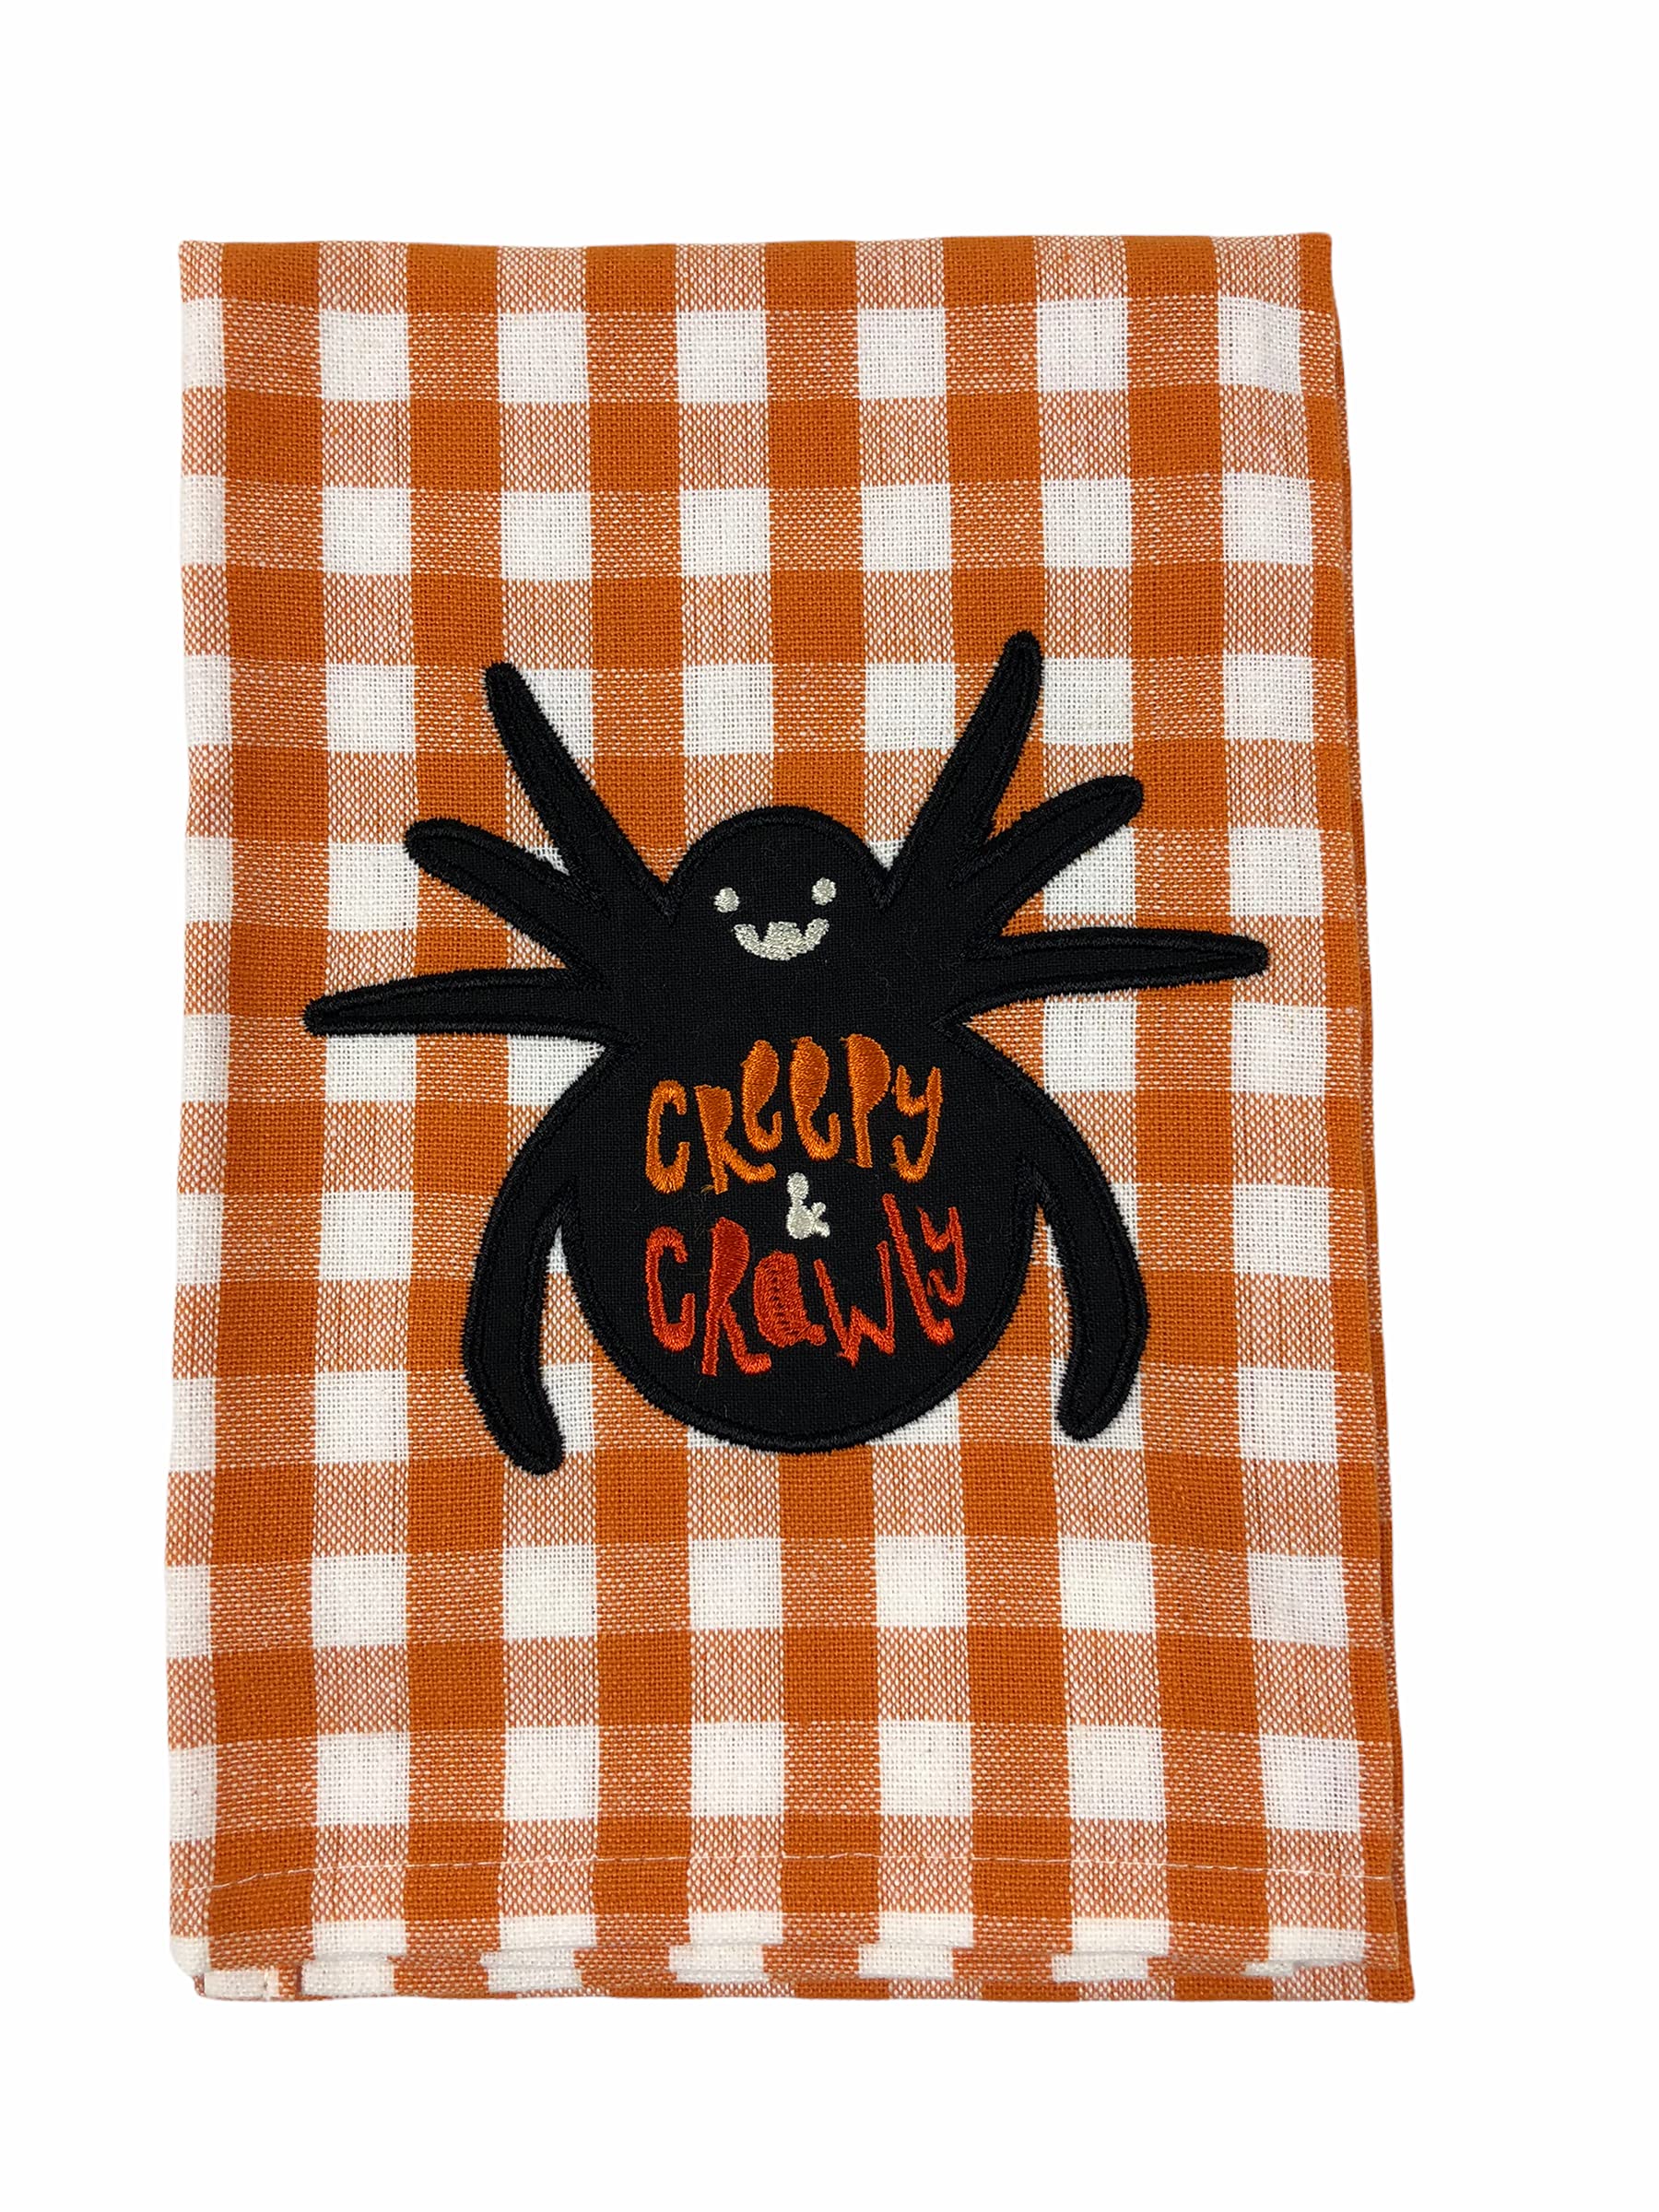 Design Imports Halloween Themed Embellished Kitchen Dish Towel Set of 3 Ghost Spider Pumpkin